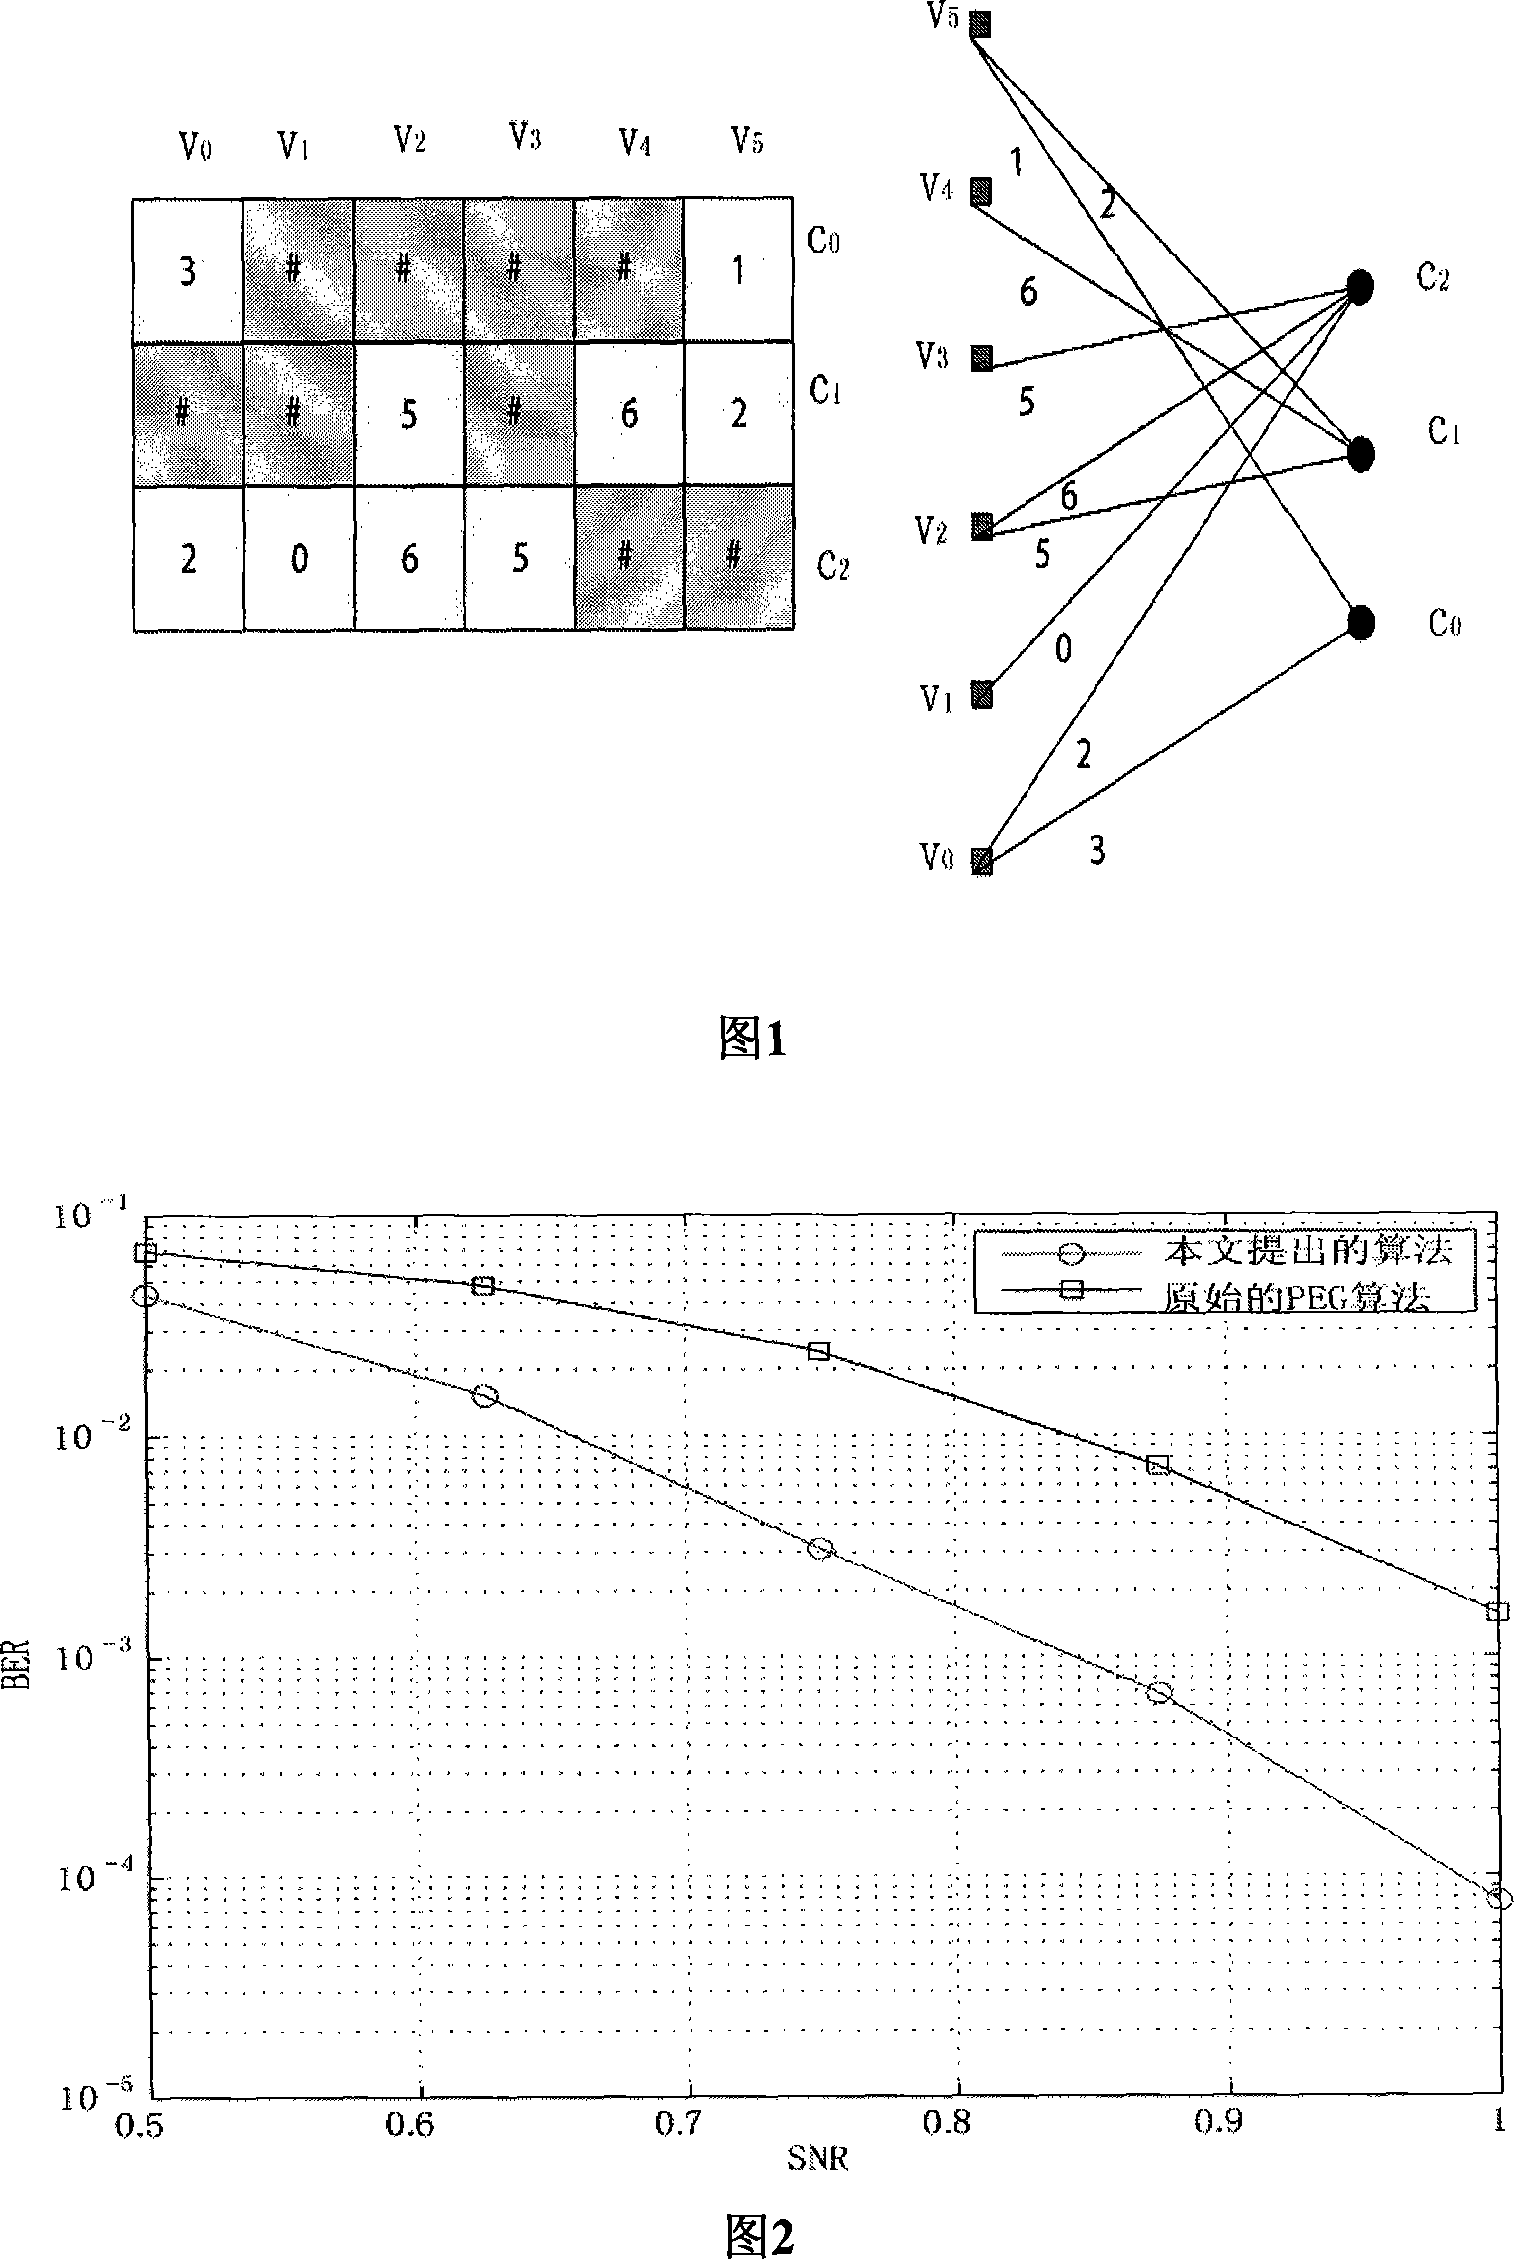 Method for configuring algorithm complex low quasi-cyclic LDPC codes